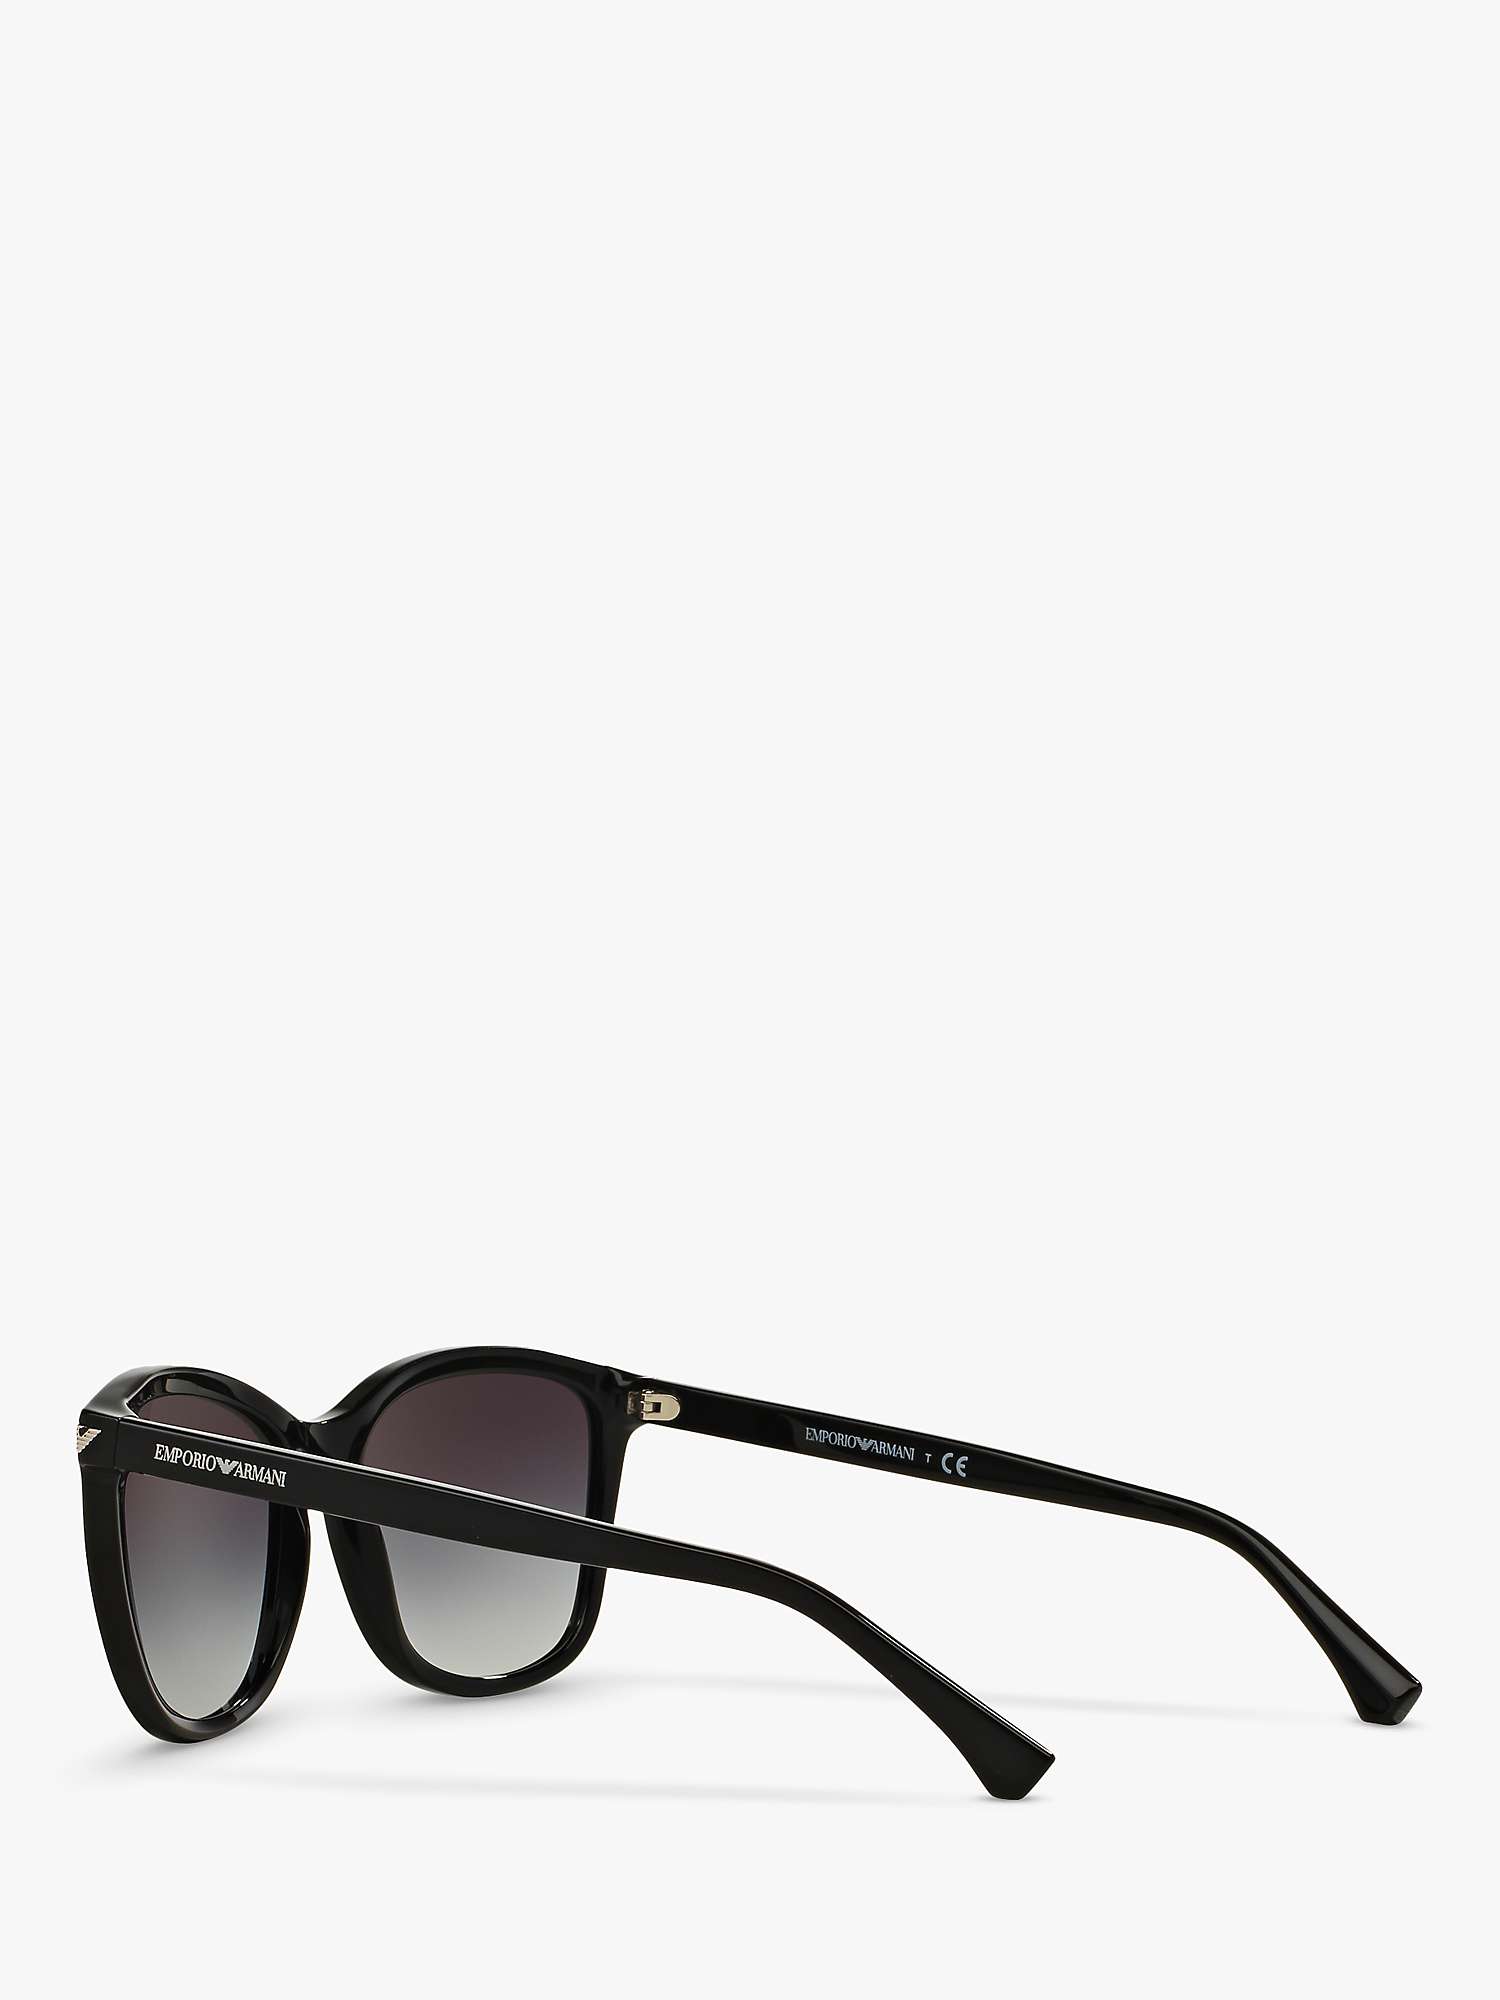 Buy Emporio Armani EA4060 Women's Square Sunglasses, Black/Grey Gradient Online at johnlewis.com